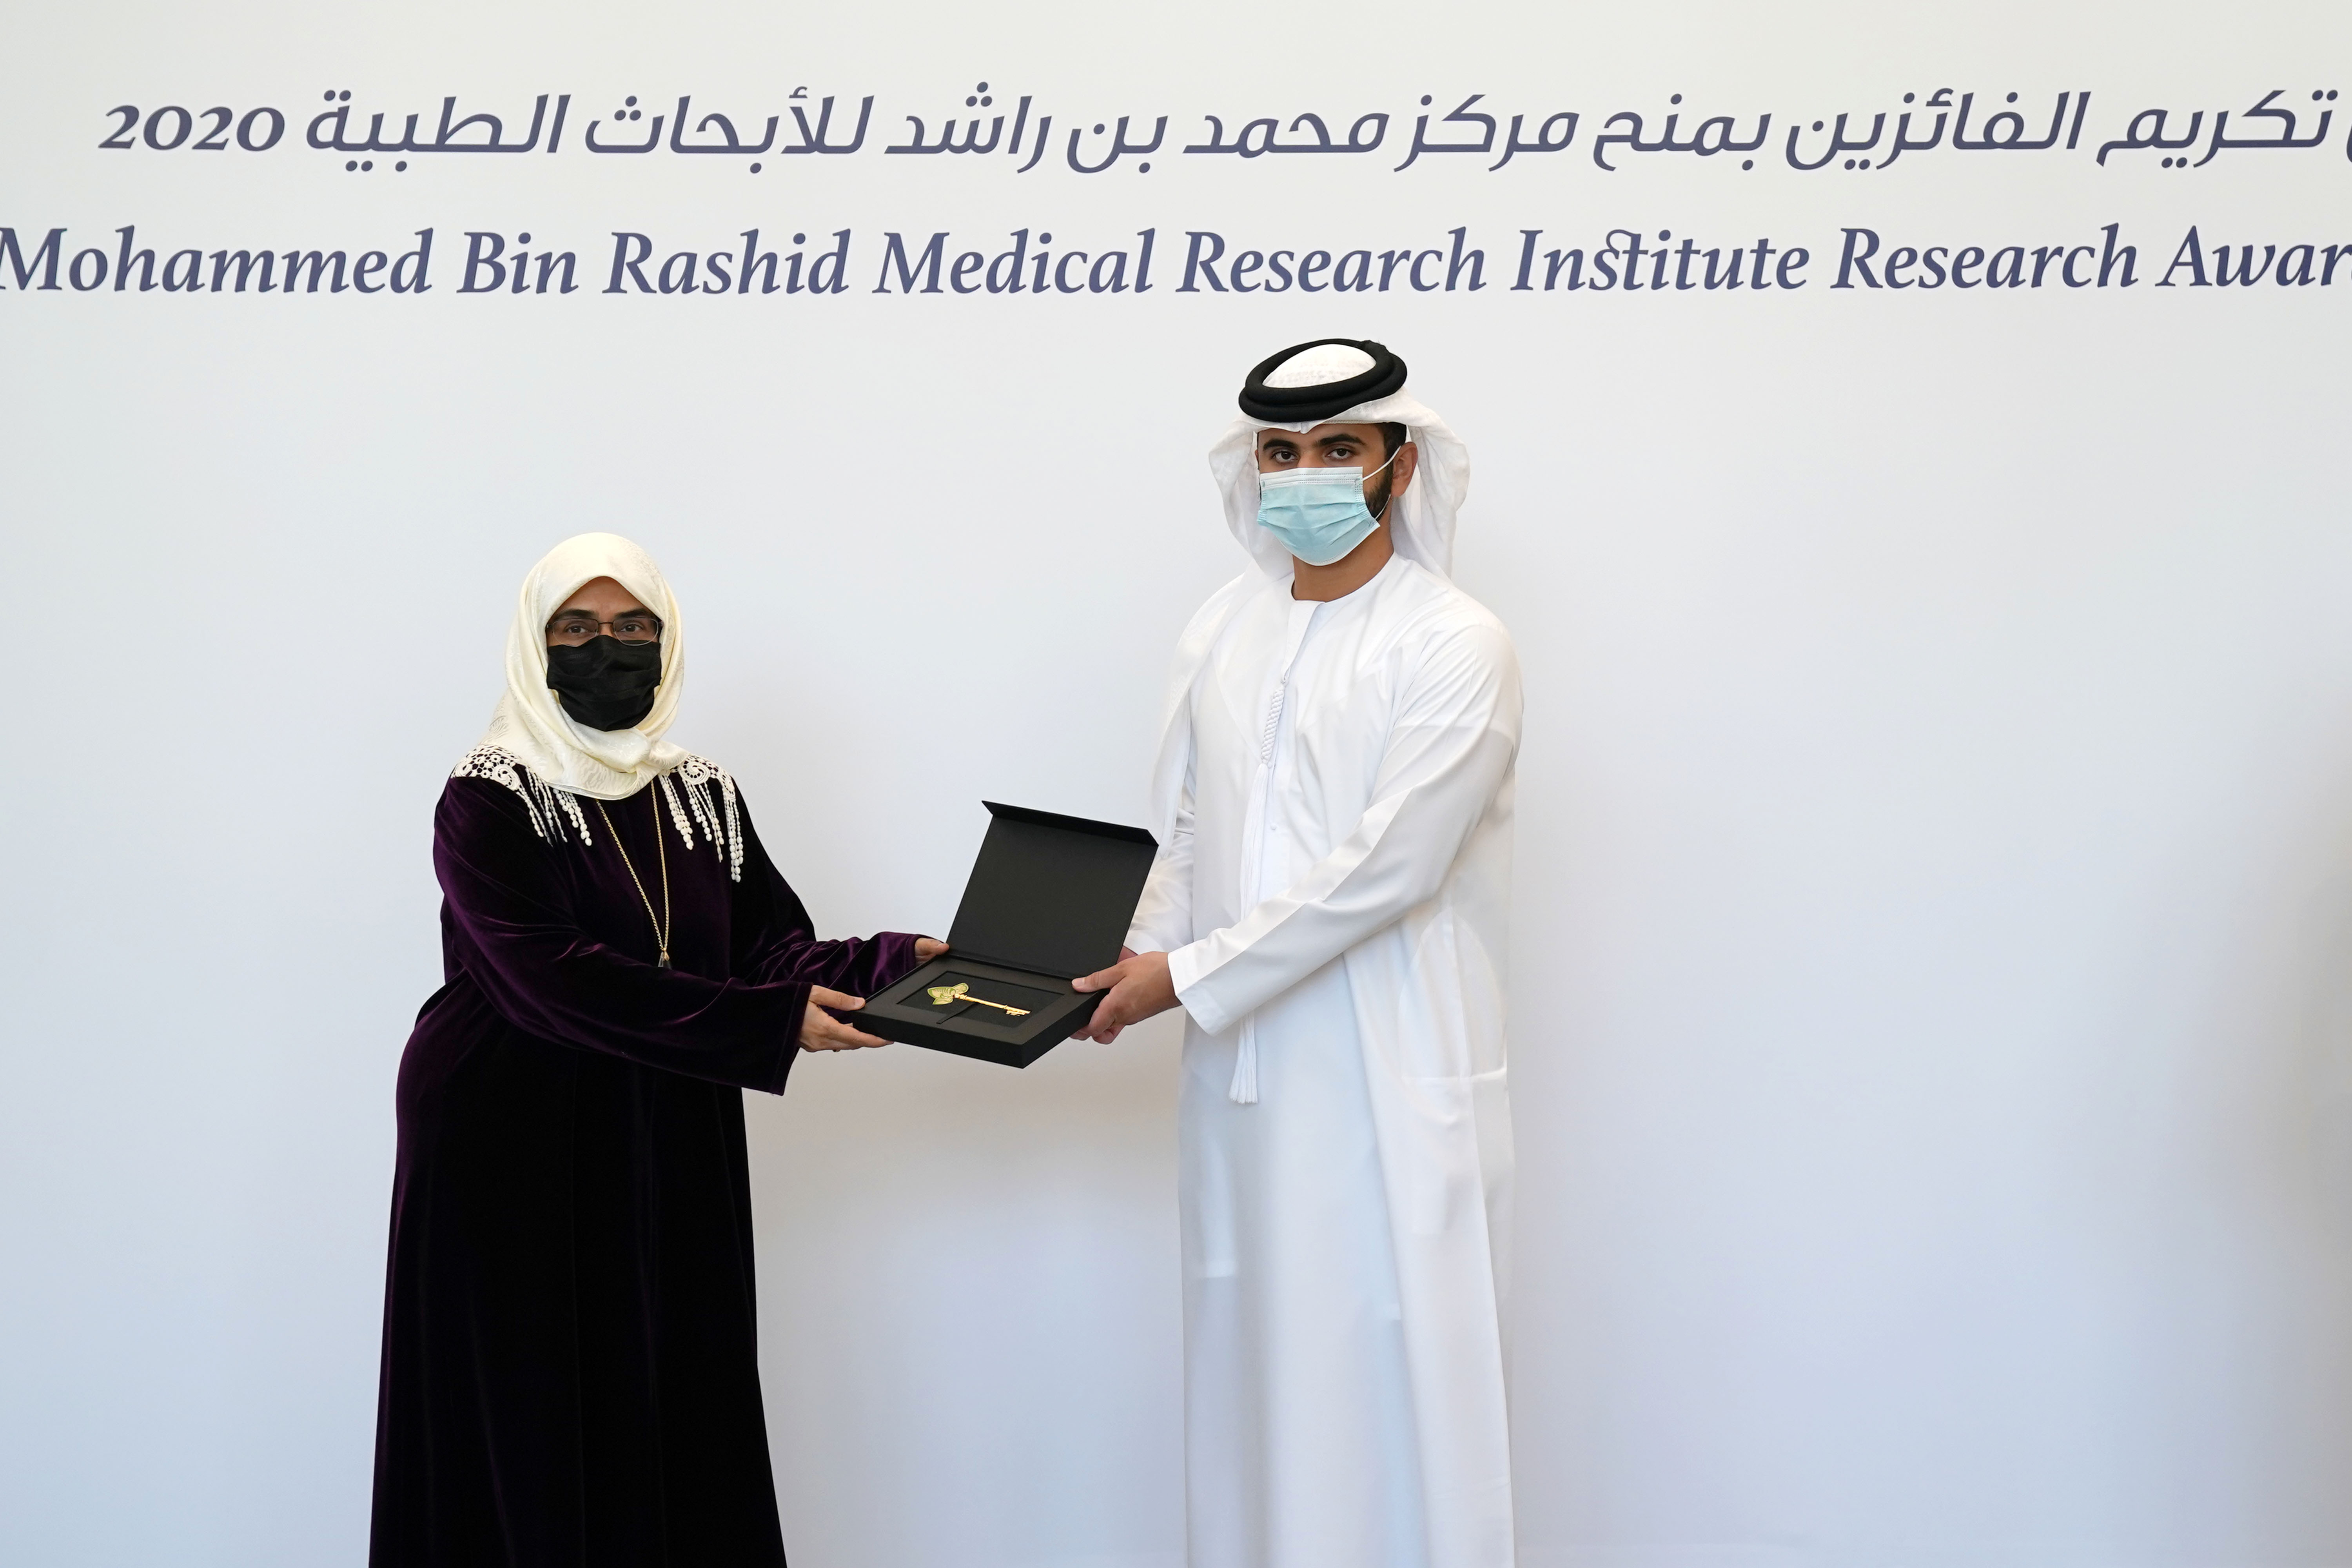 mohammed bin rashid medical research institute